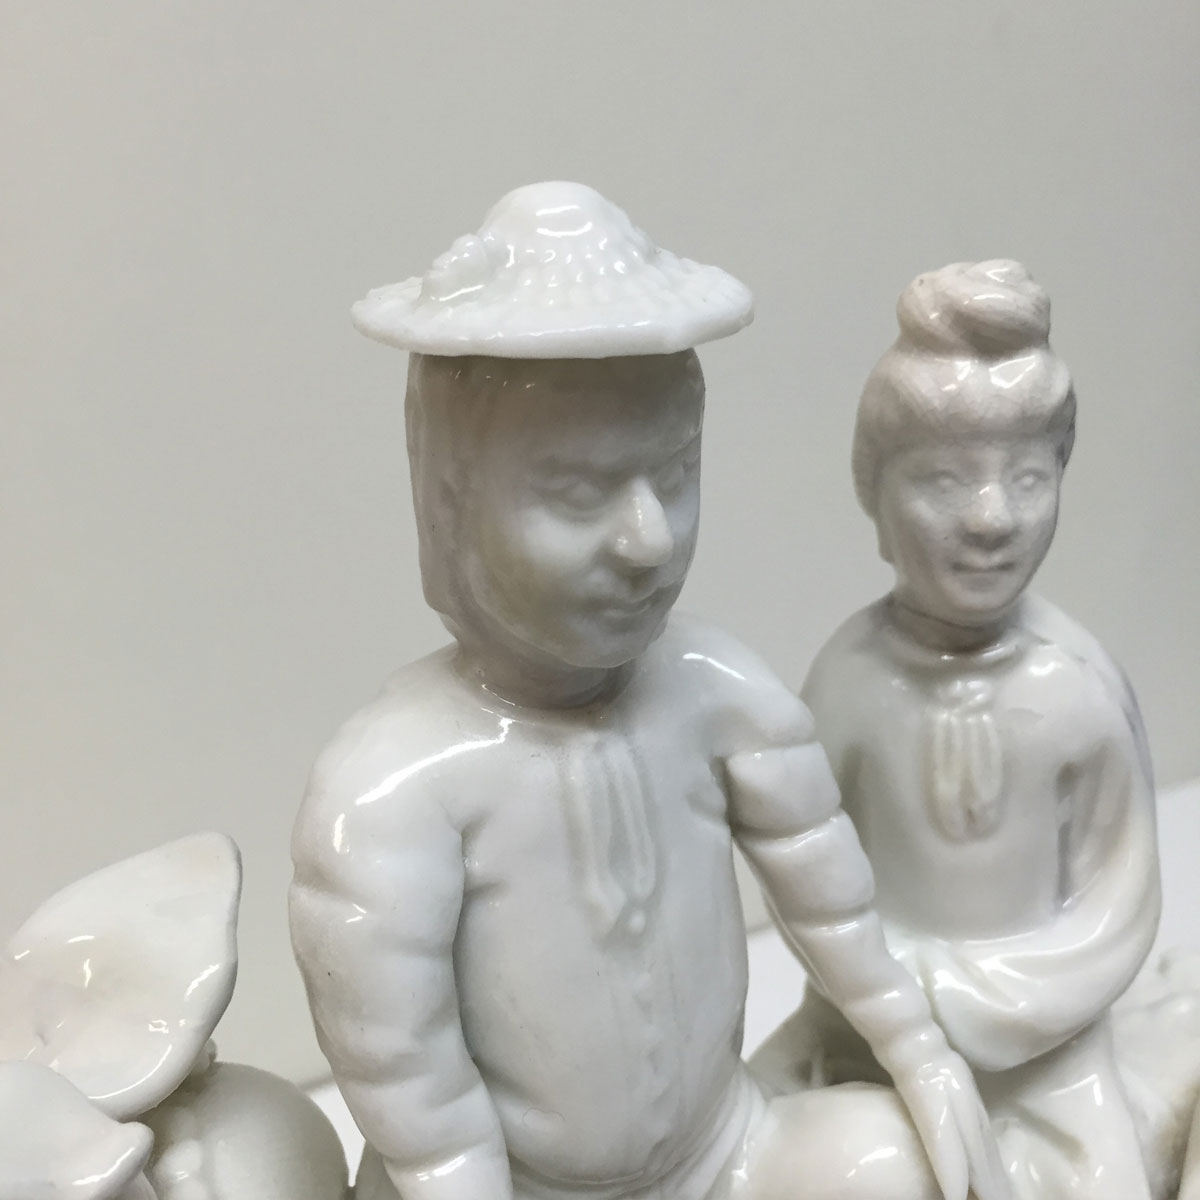 Two white porcelain figures